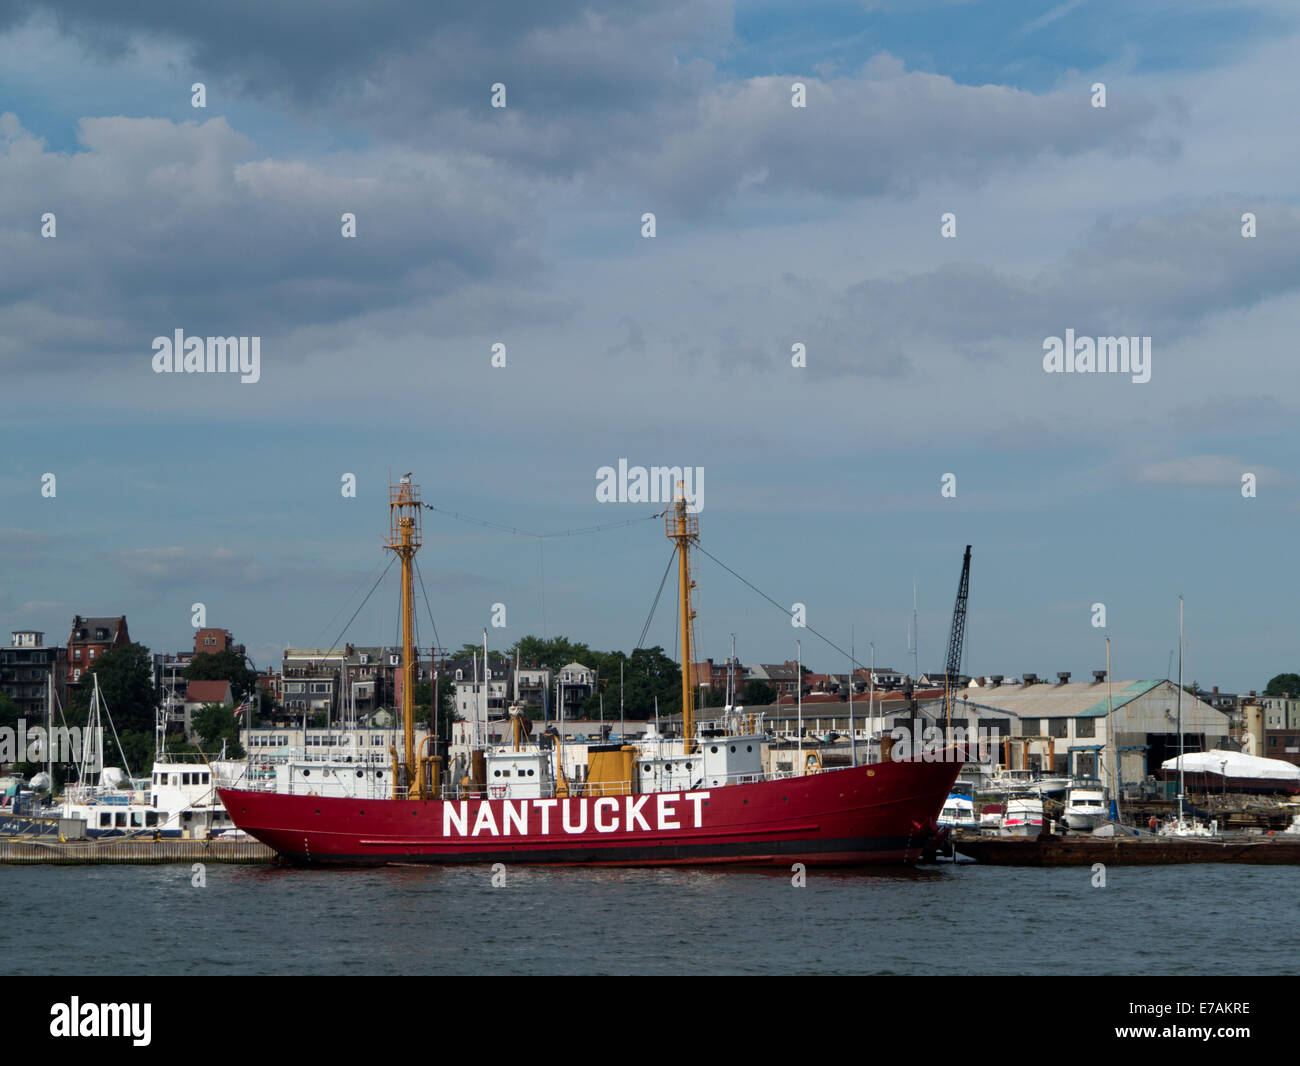 nantucket lightship lv-112